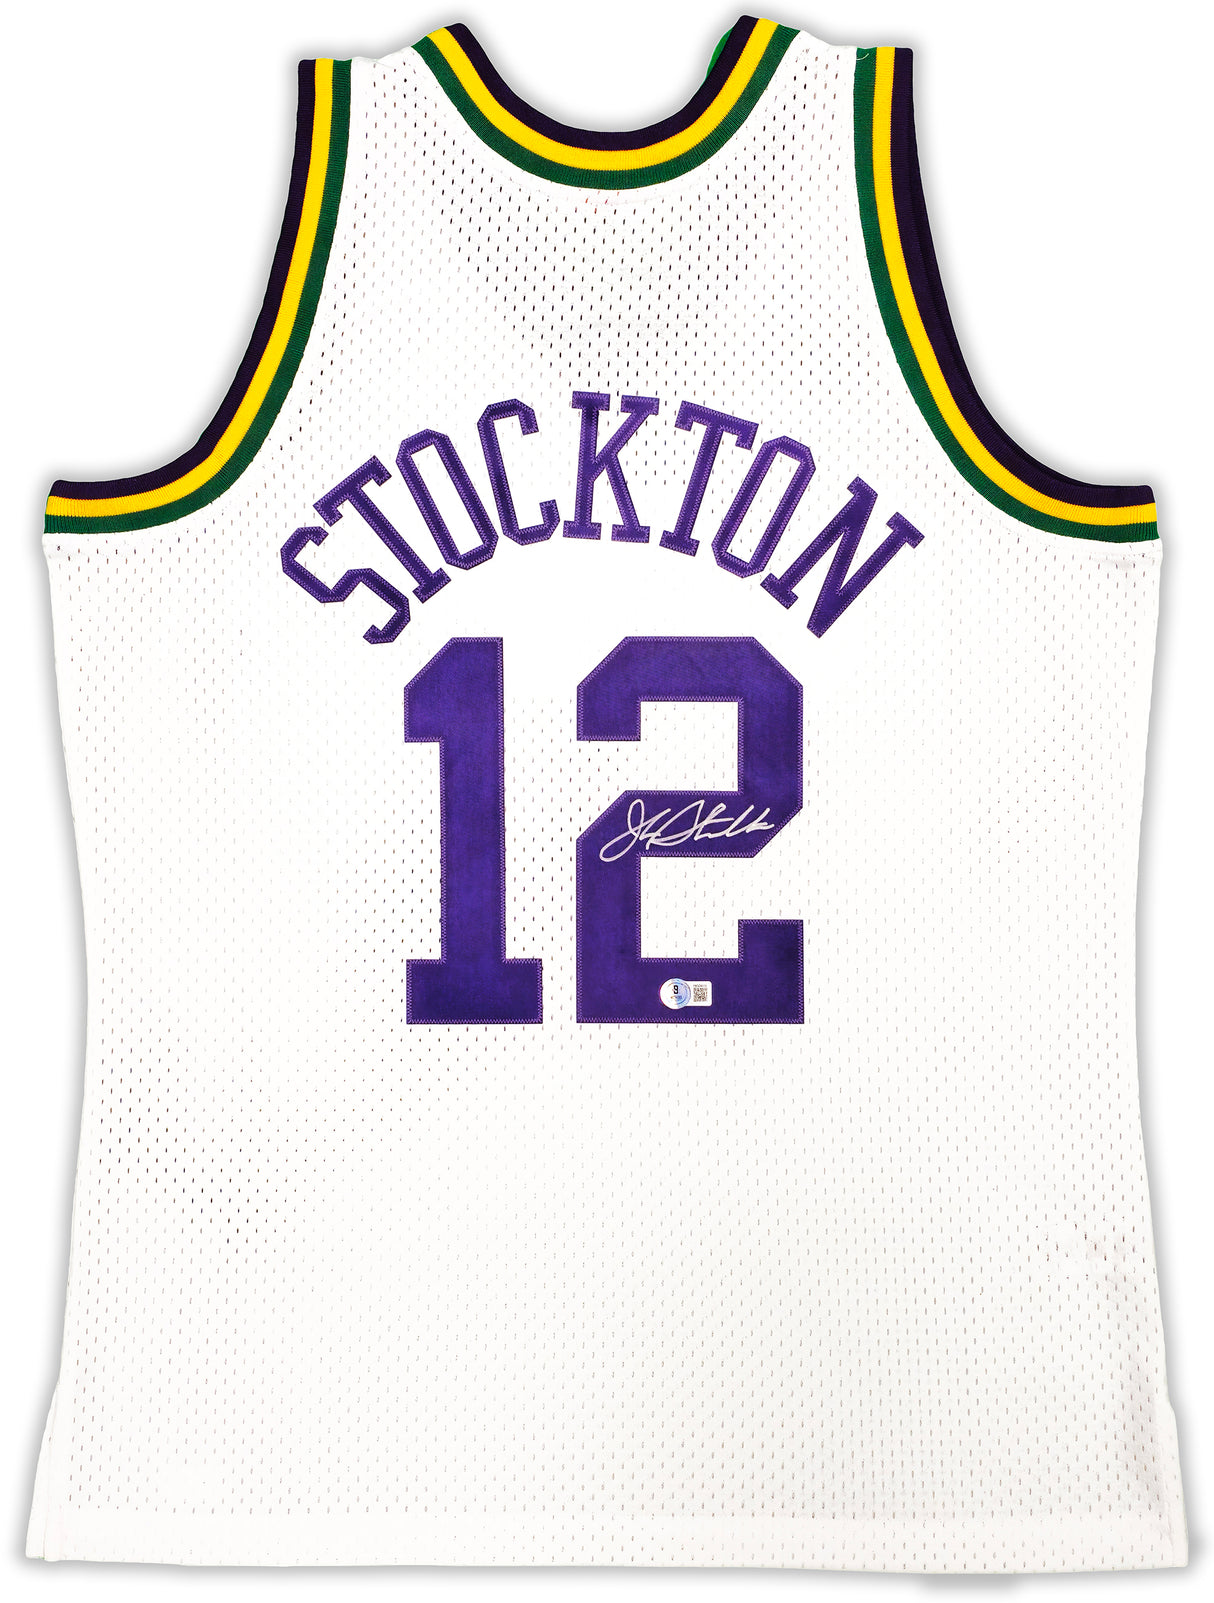 Utah Jazz John Stockton Autographed White Authentic Mitchell & Ness 1991-92 Hardwood Classic Swingman Jersey Size L Beckett BAS Witness Stock #224339